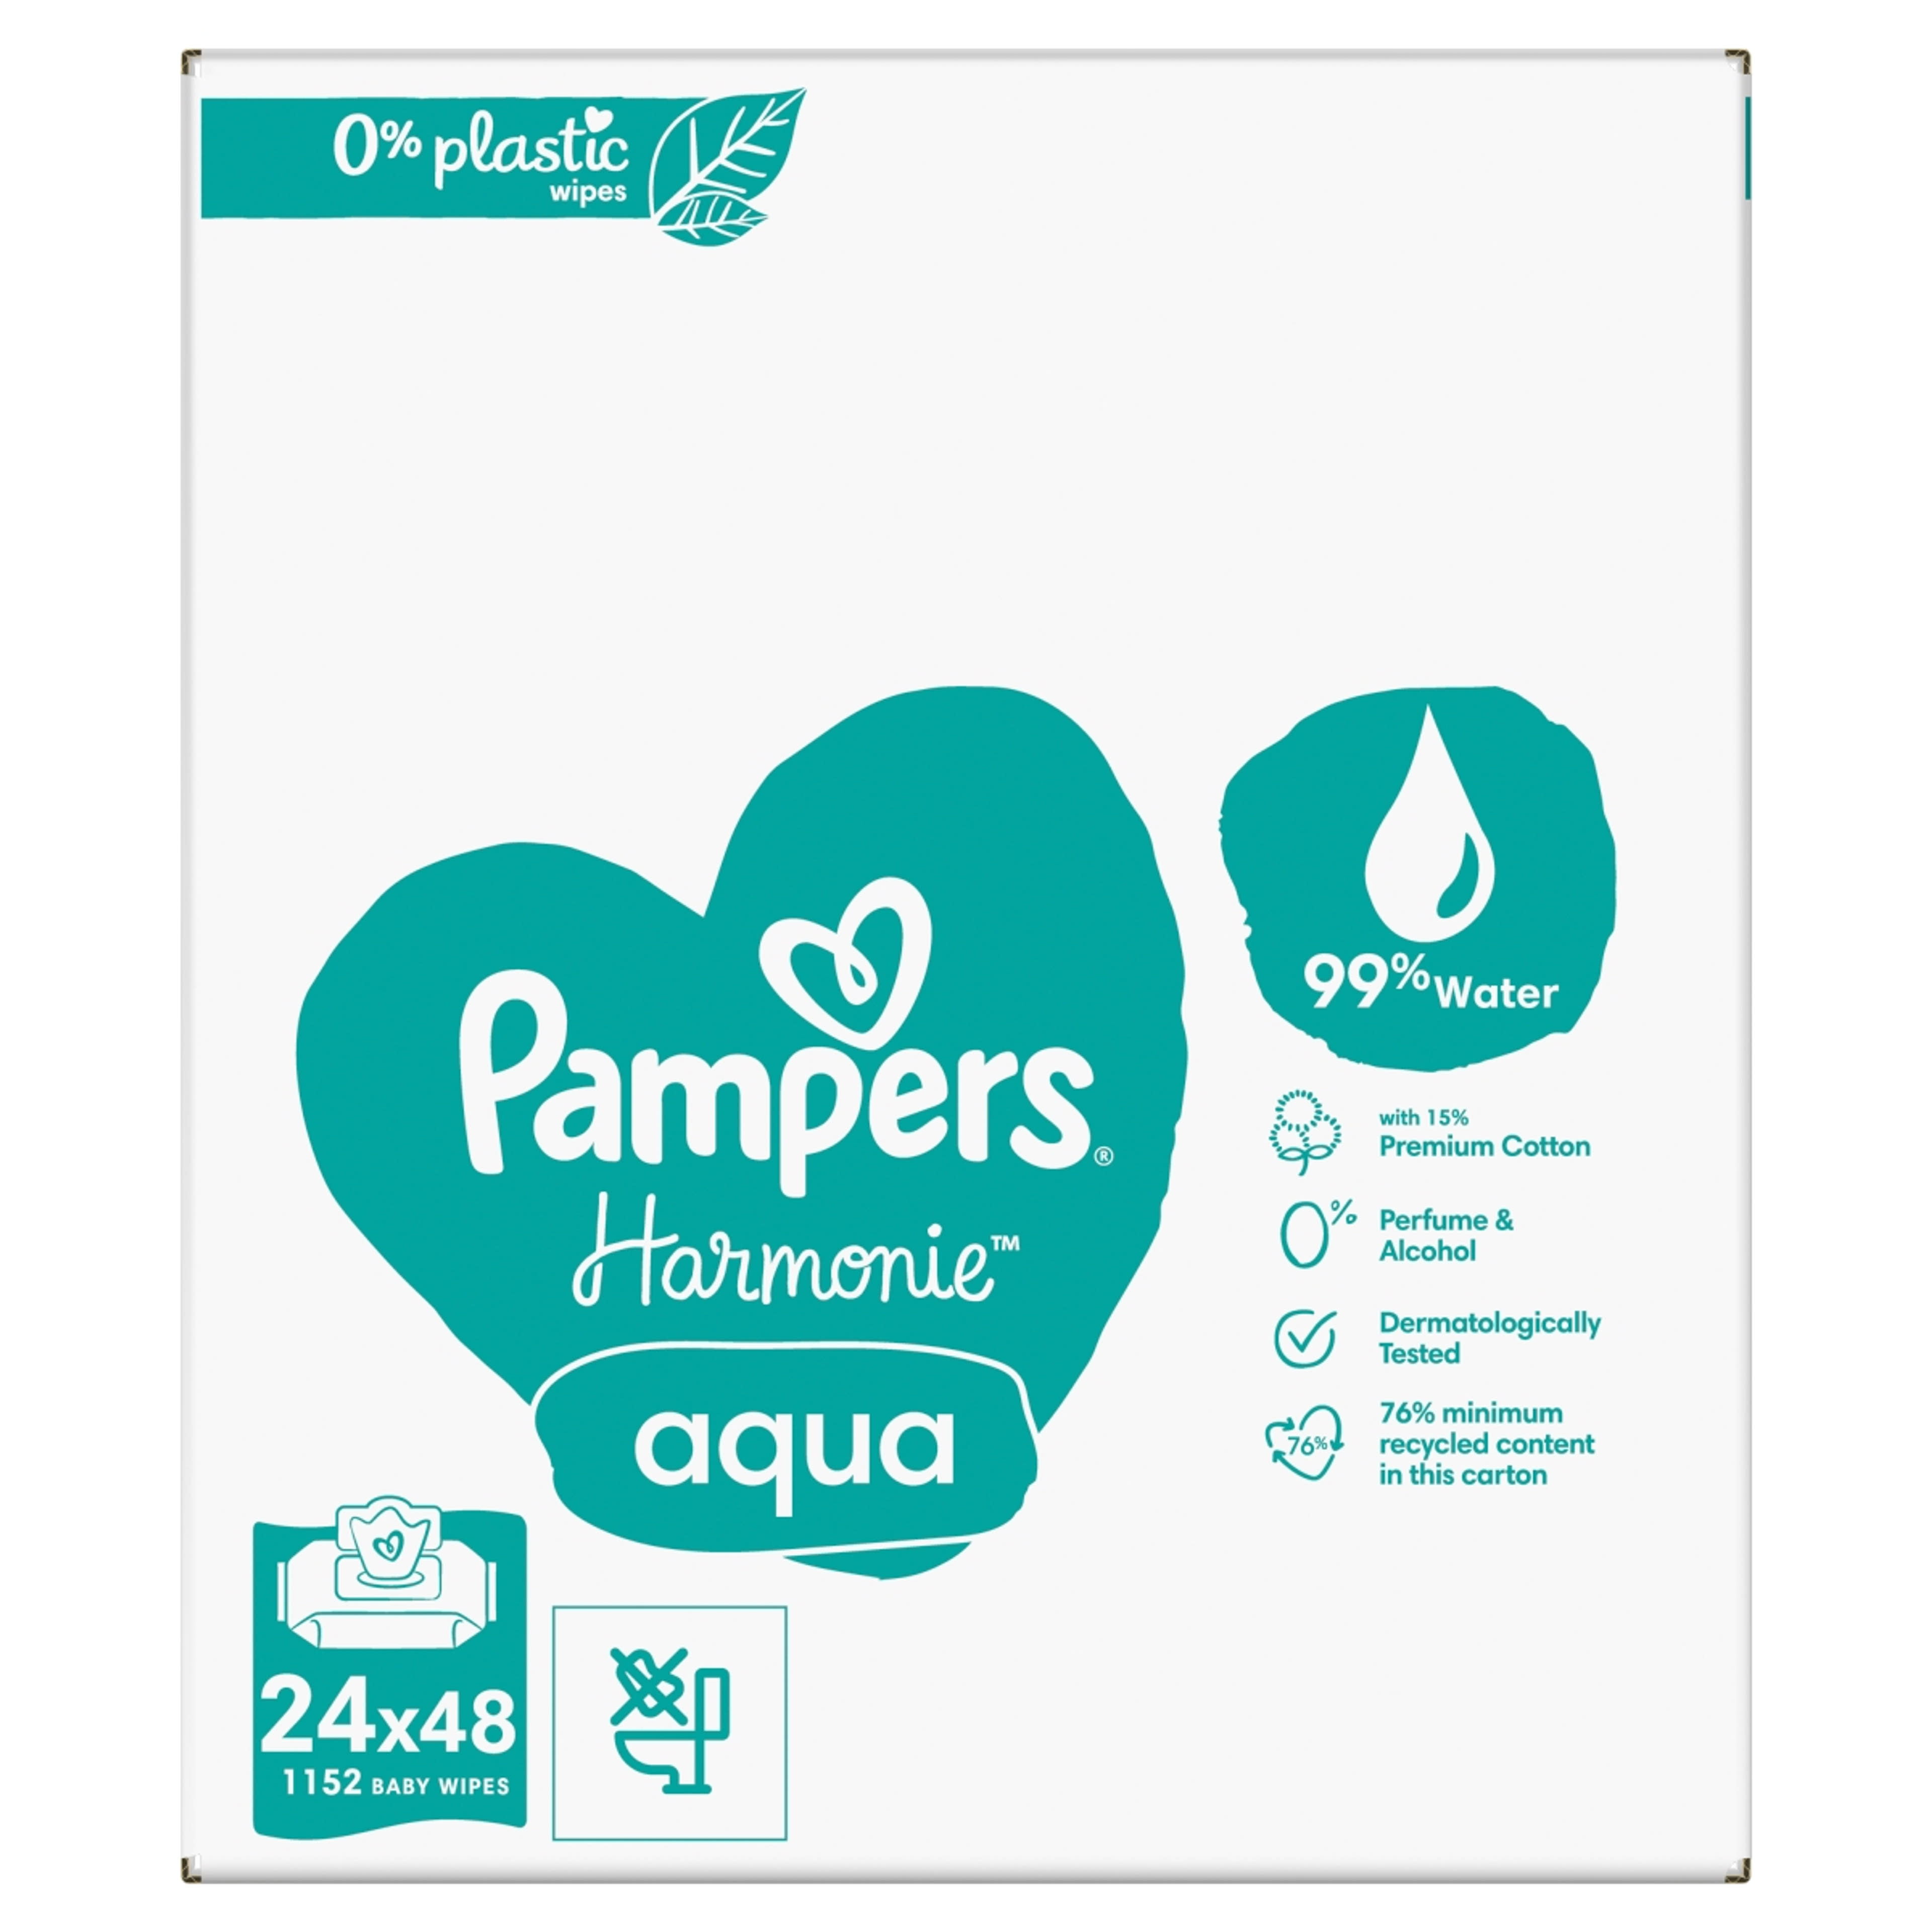 Pampers Harmonie Aqua nedves törlőkendő 24x 48 db - 1152 db